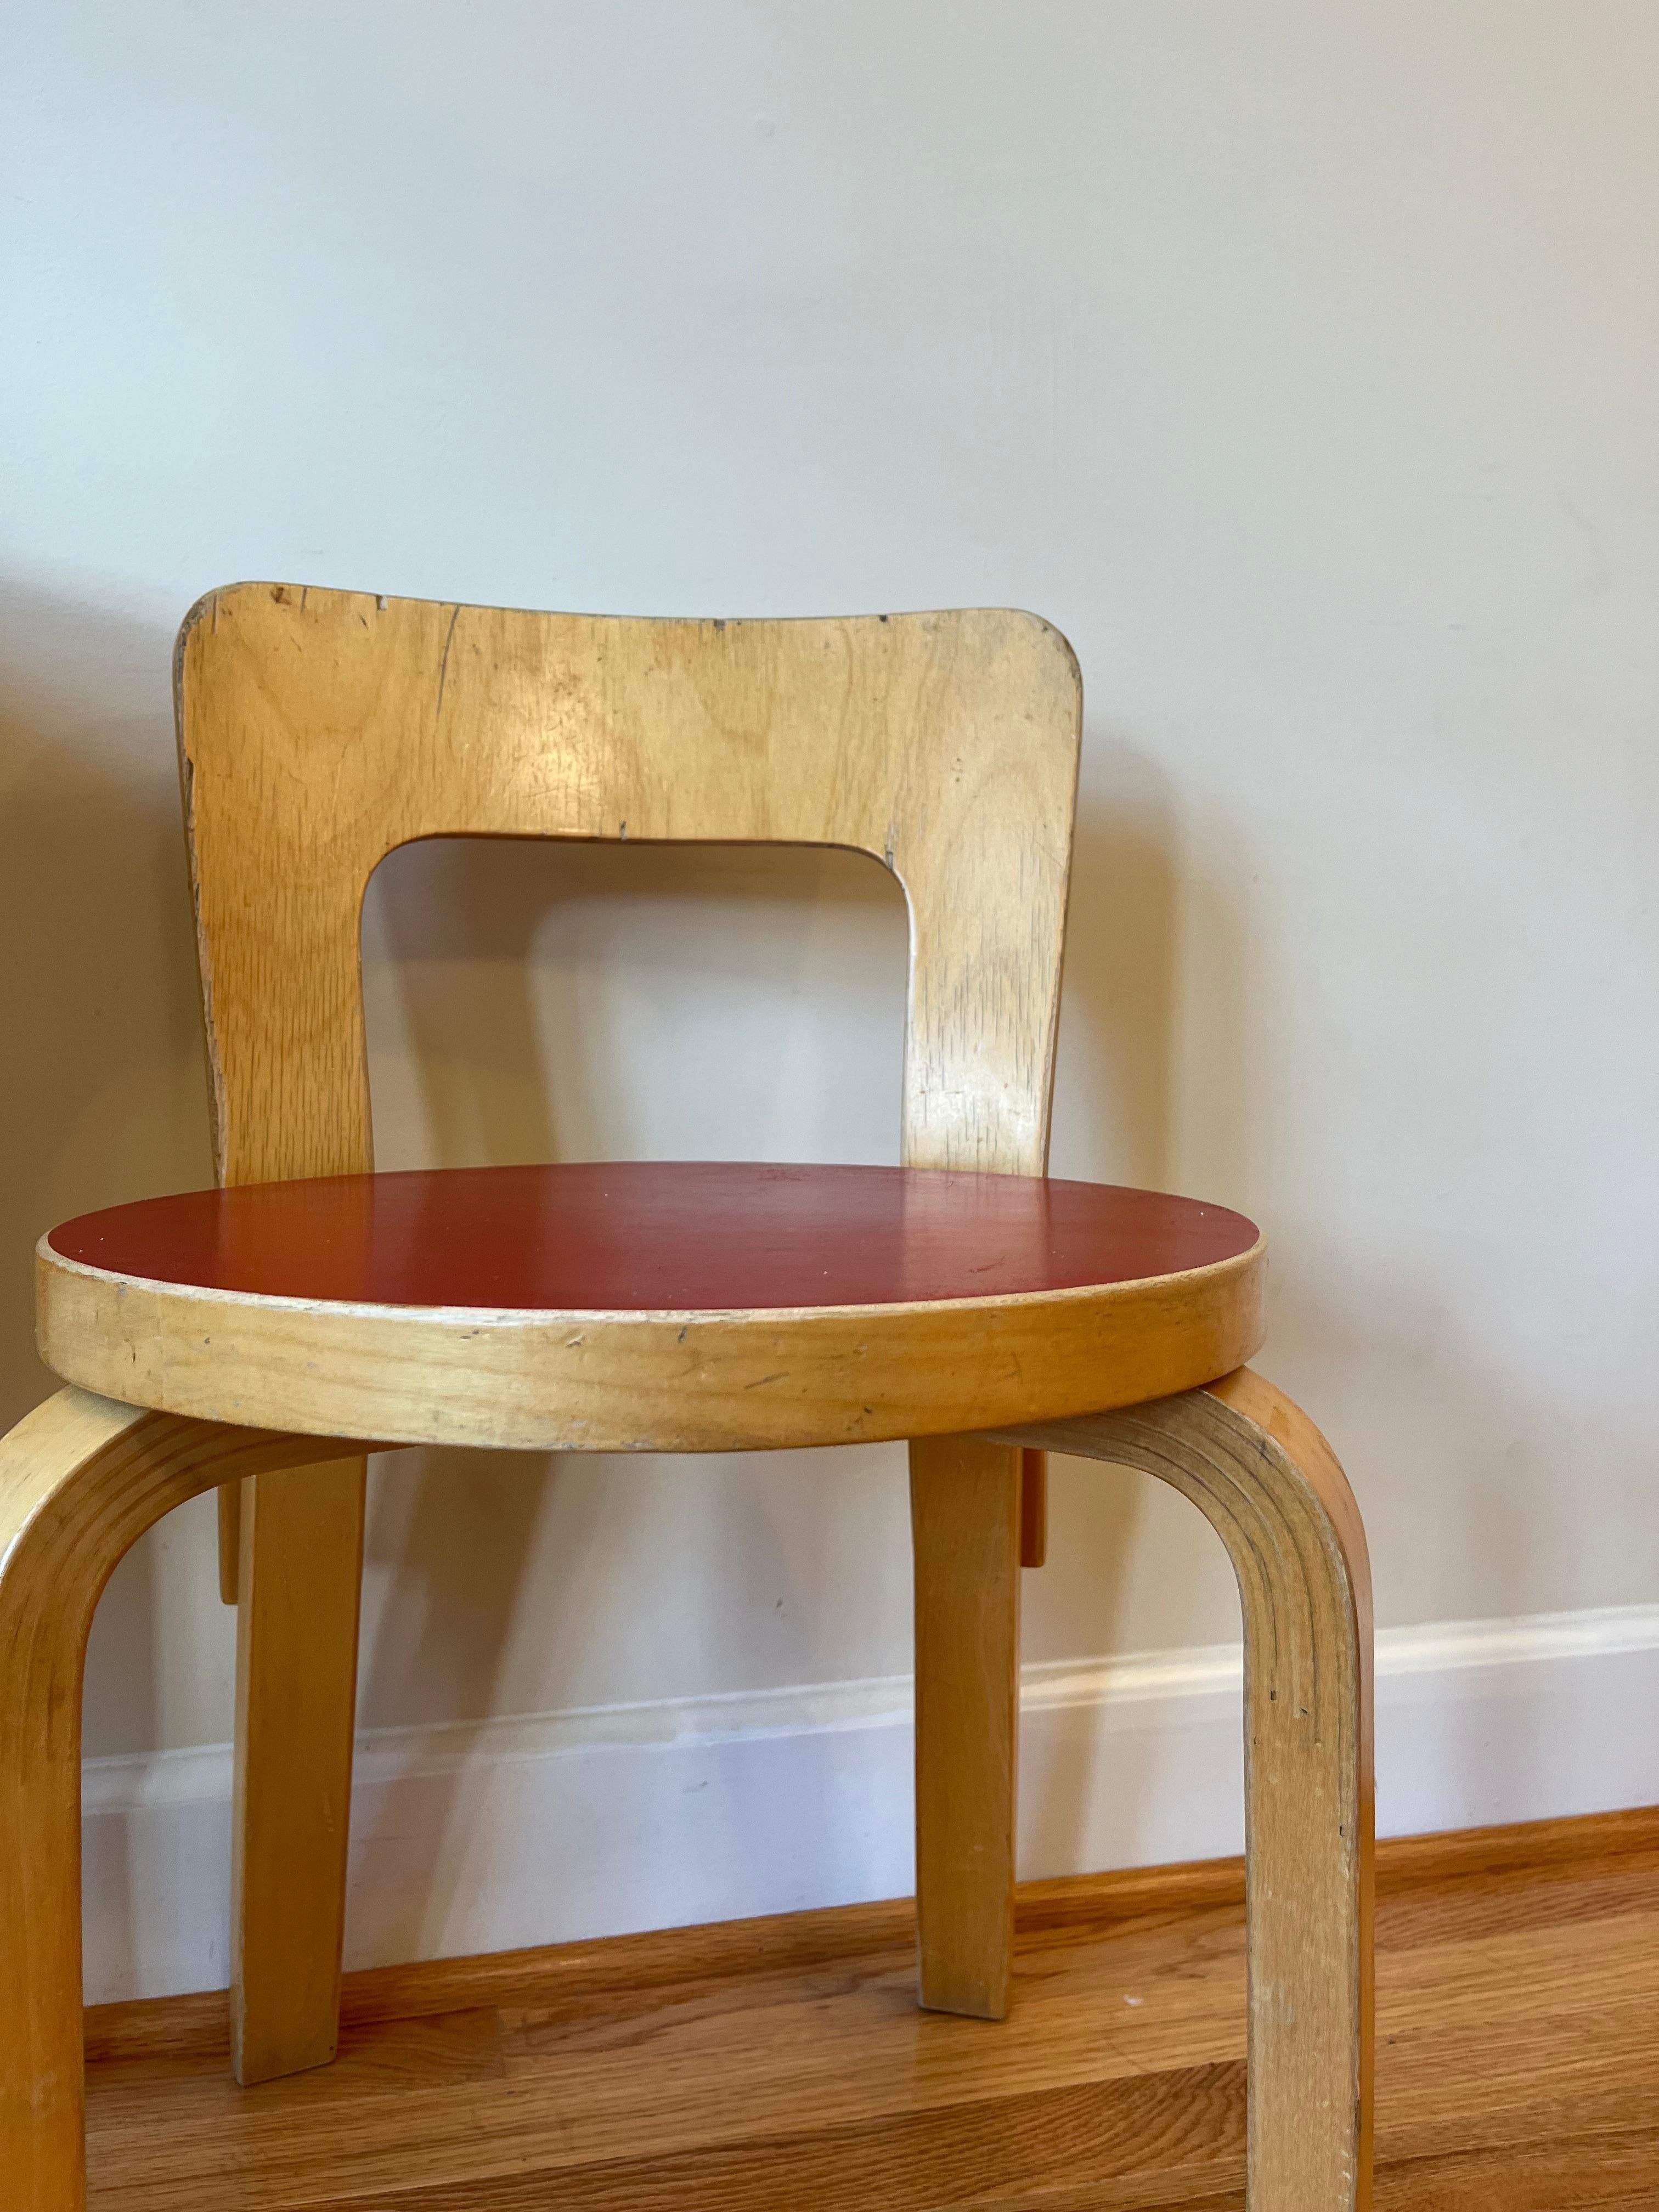 Mid-20th Century Chair 65 by Alvar Aalto for Artek (Red Linoleum)